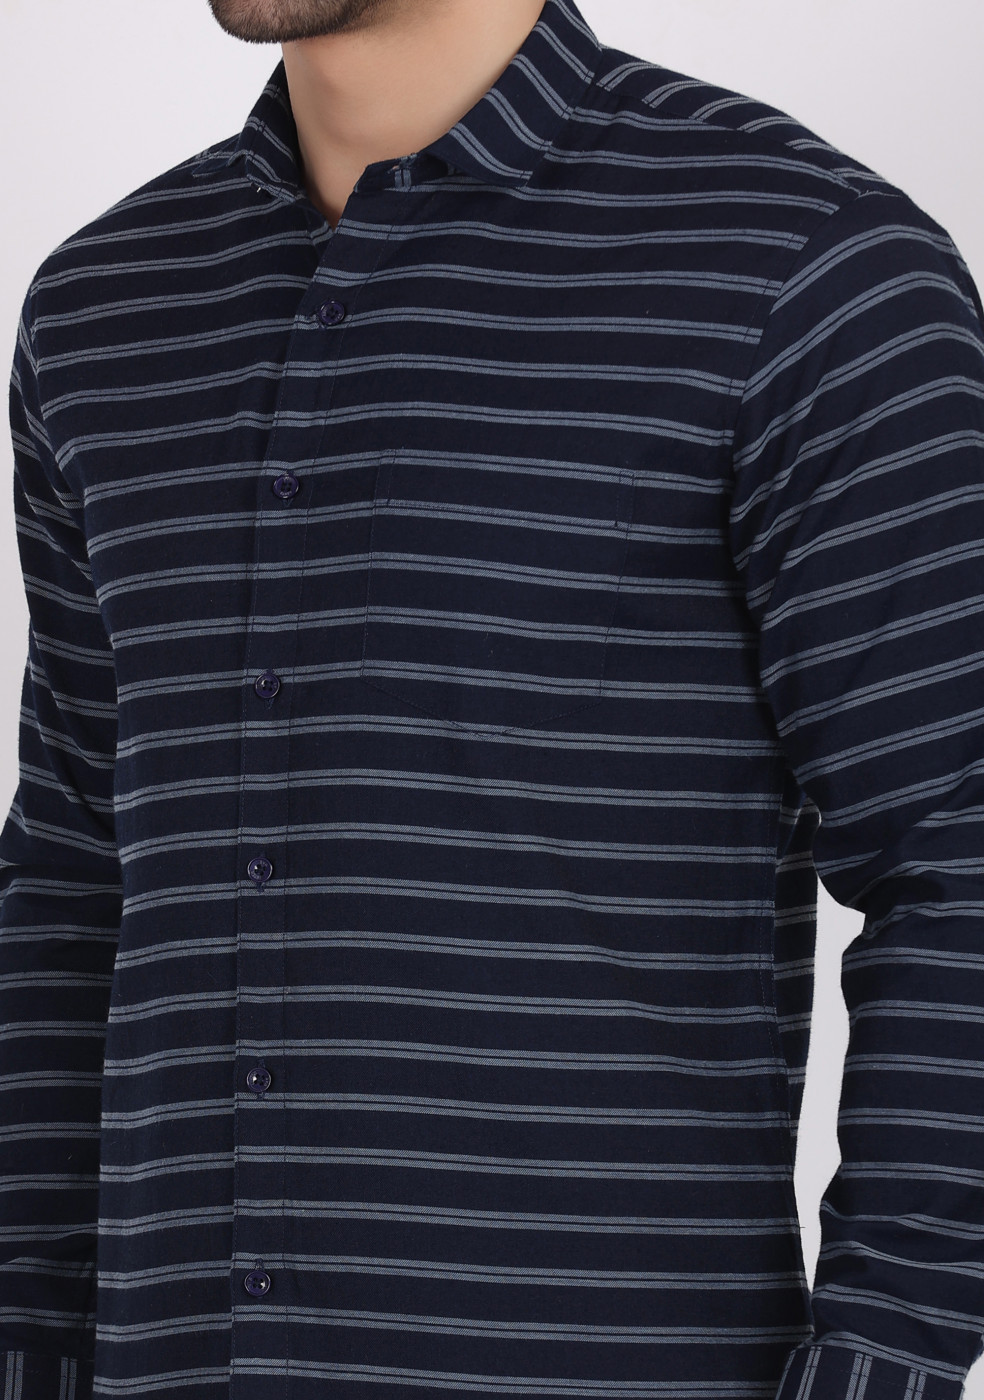 ASHTOM Men Navy & Gray Horizontal Striped Casual Shirt